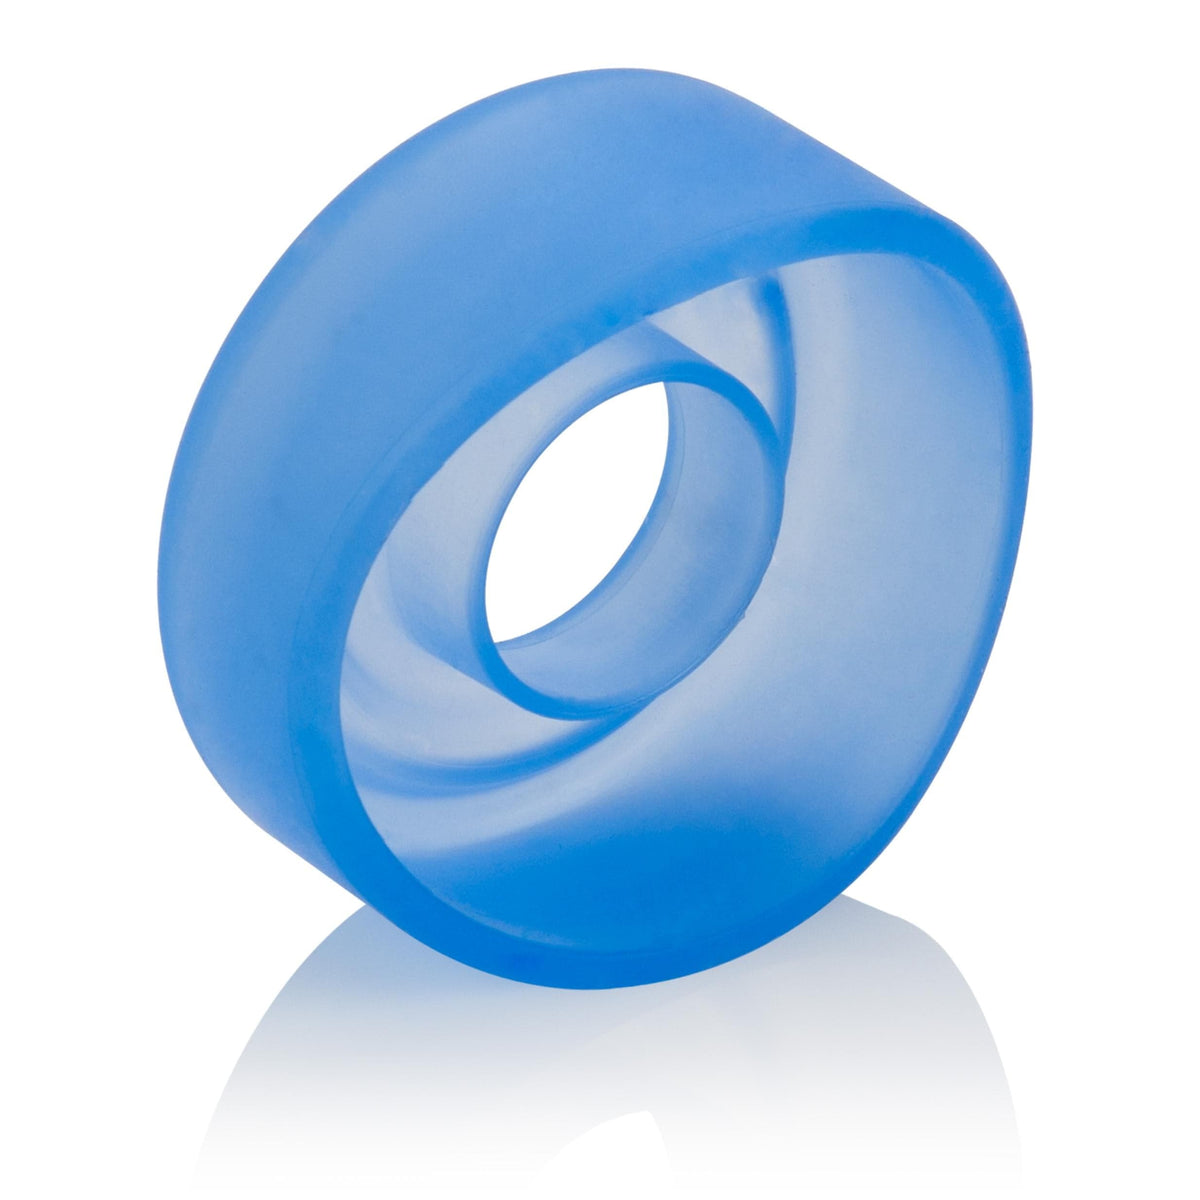 advanced silicone pump sleeve blue